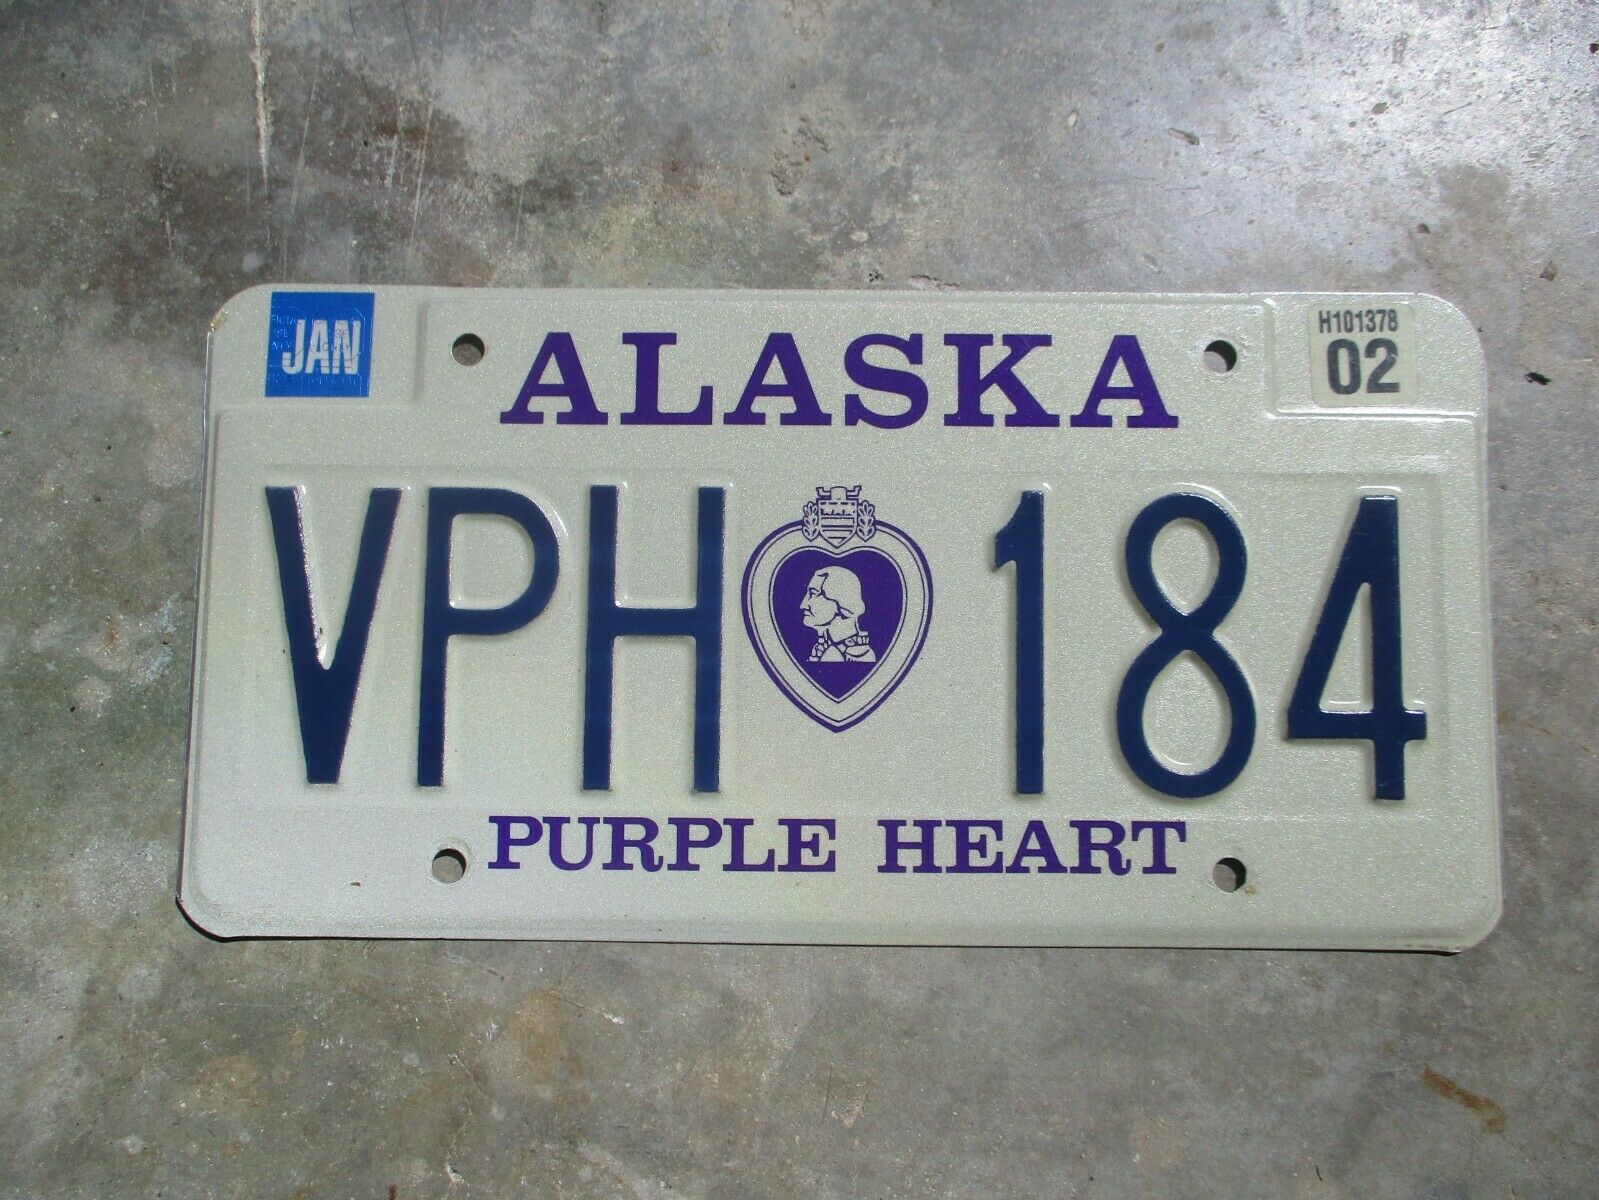 Alaska 2002 Purple Heart License Plate #  Vph  184